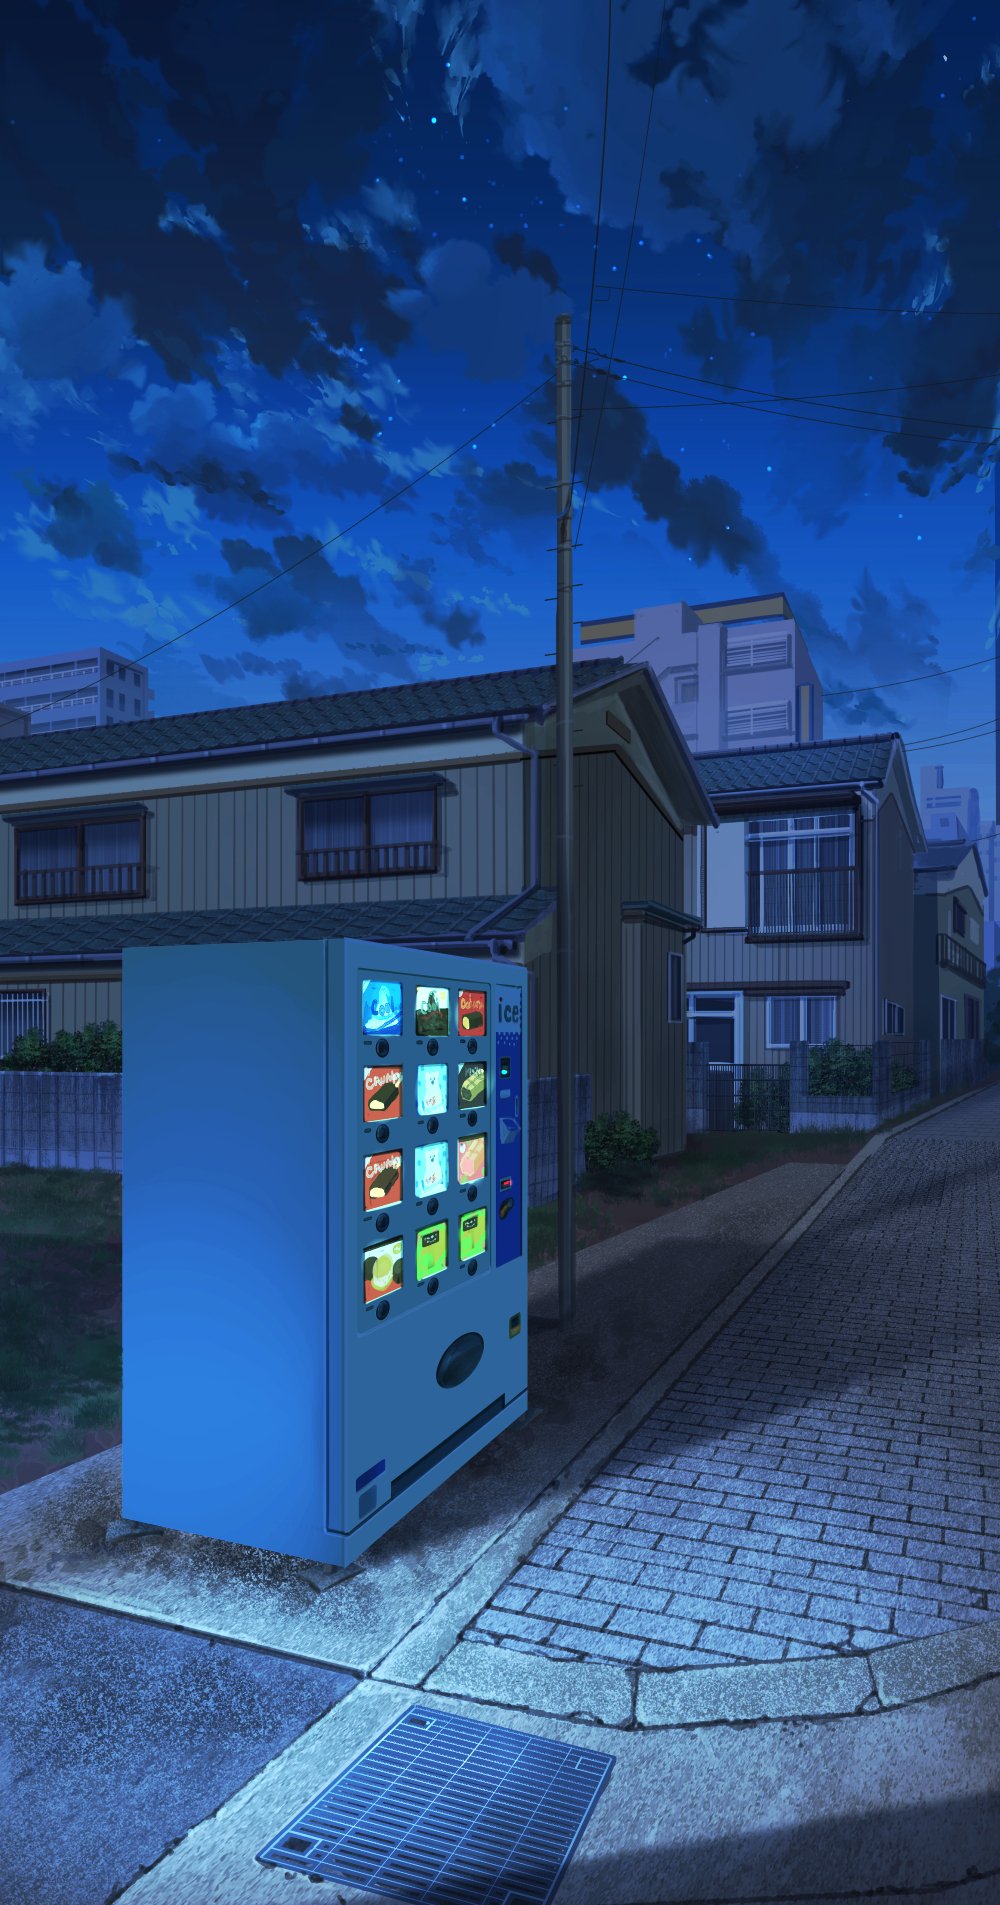 Anime Landscape: Lonely vending machine on street background